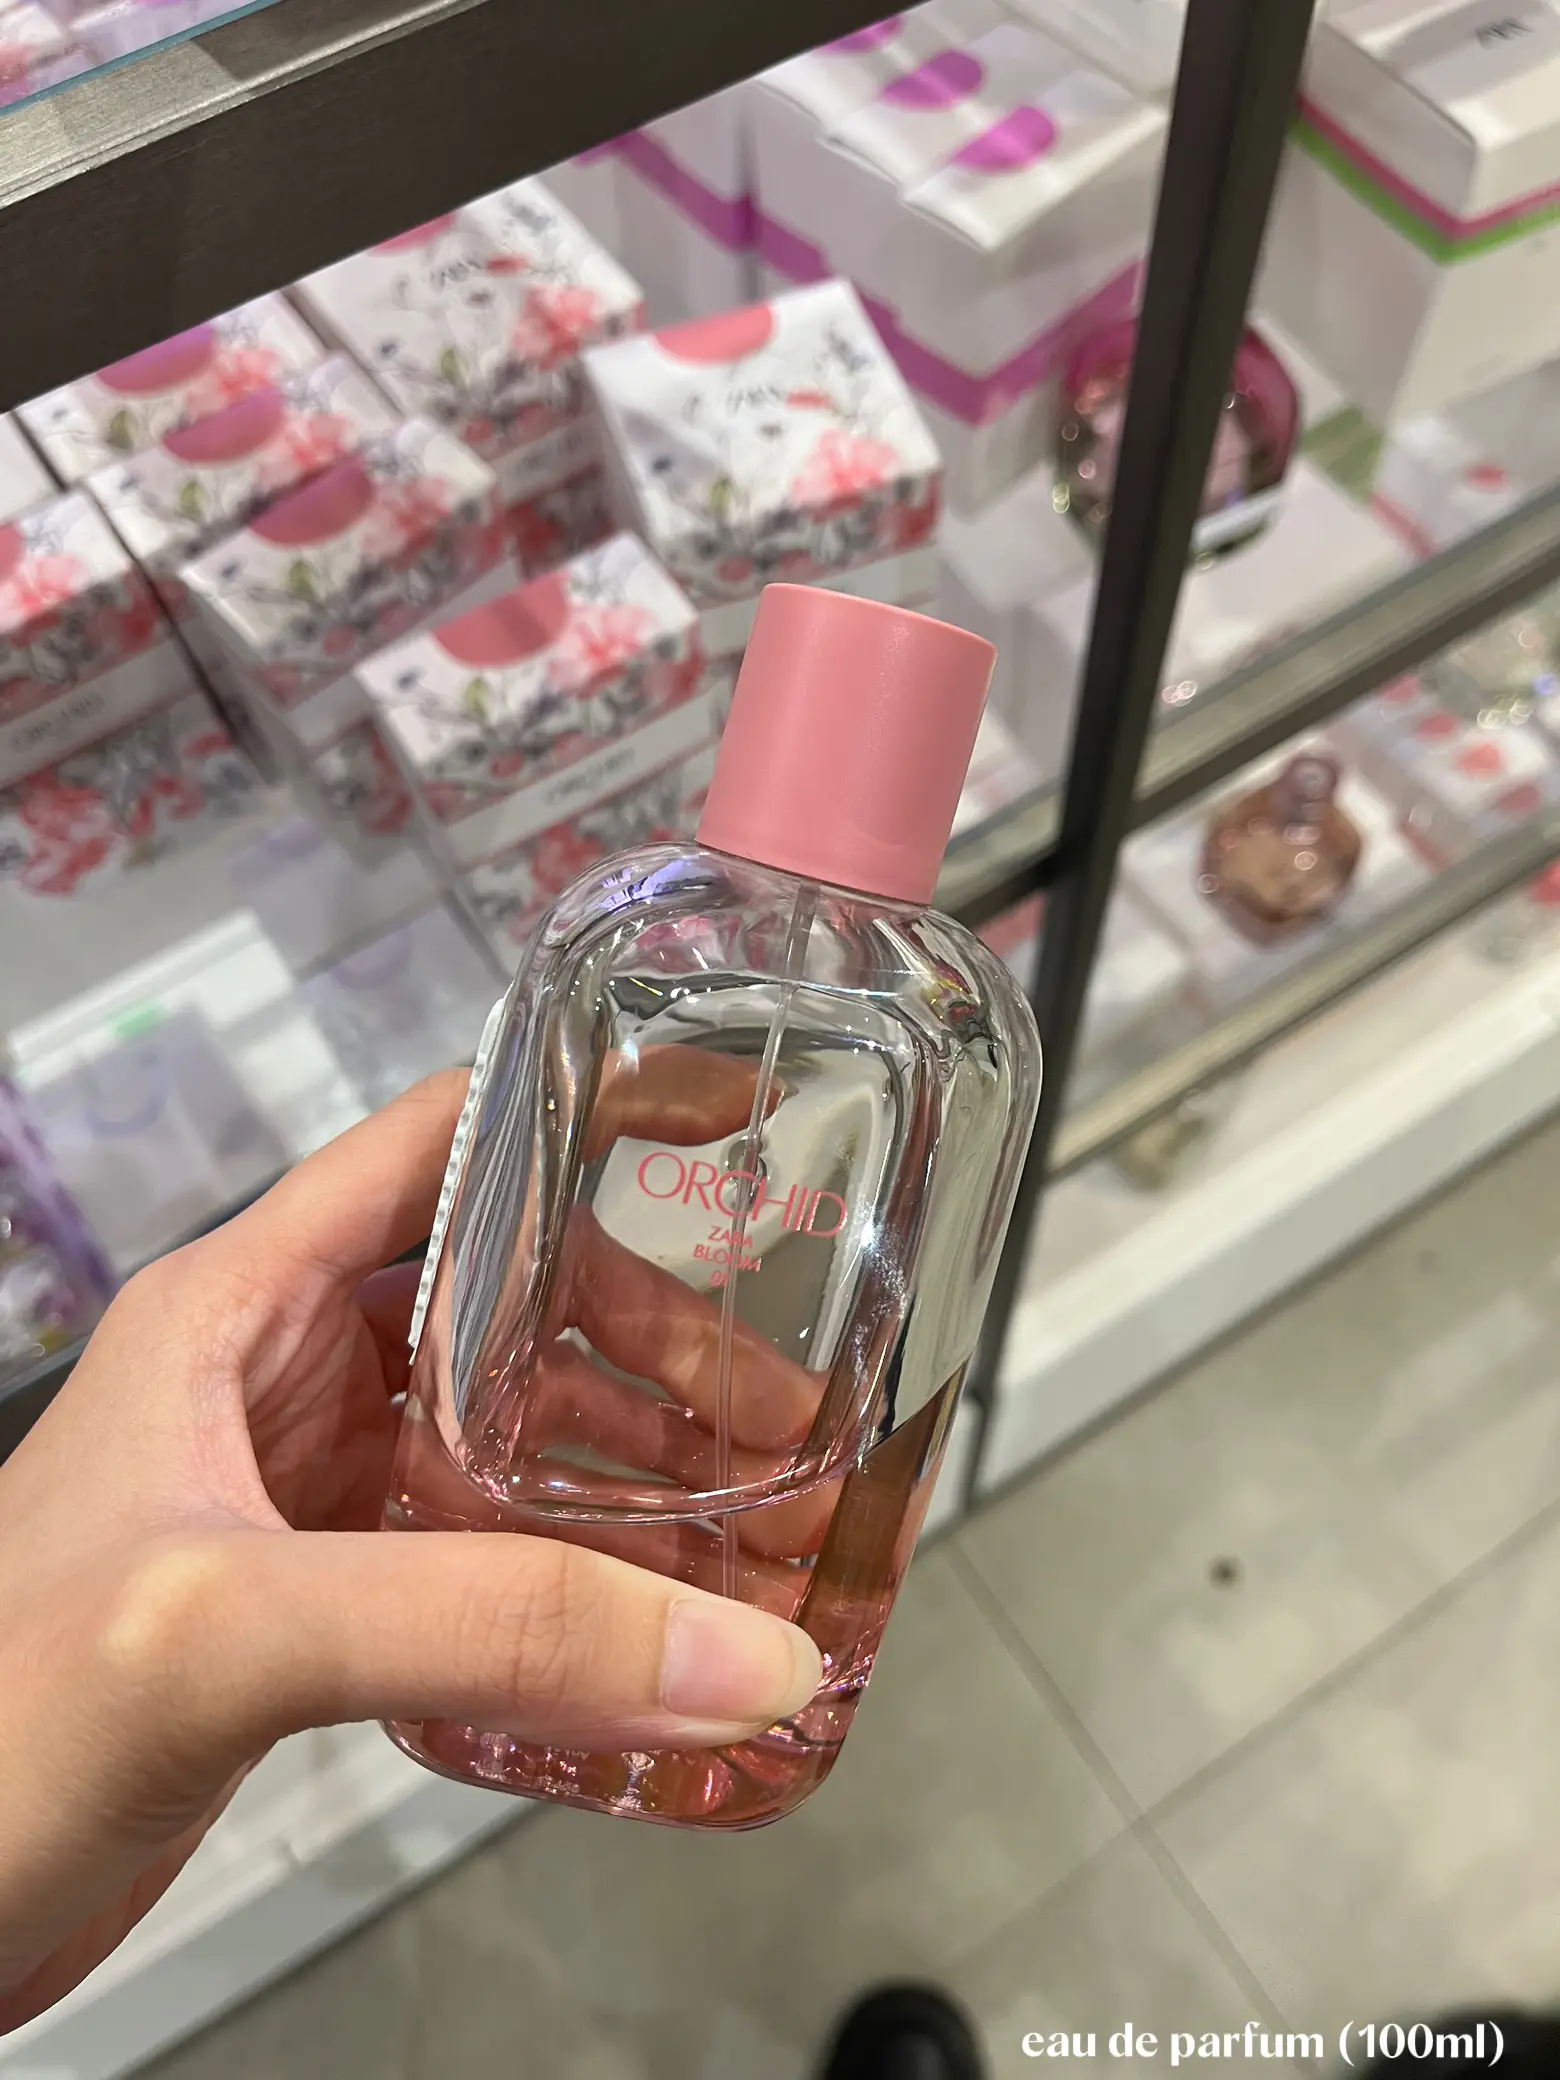 Zara Red Temptation Perfume for Women EDP Eau De Parfum Rollerball 10 ML  (0.34 FL. OZ) 